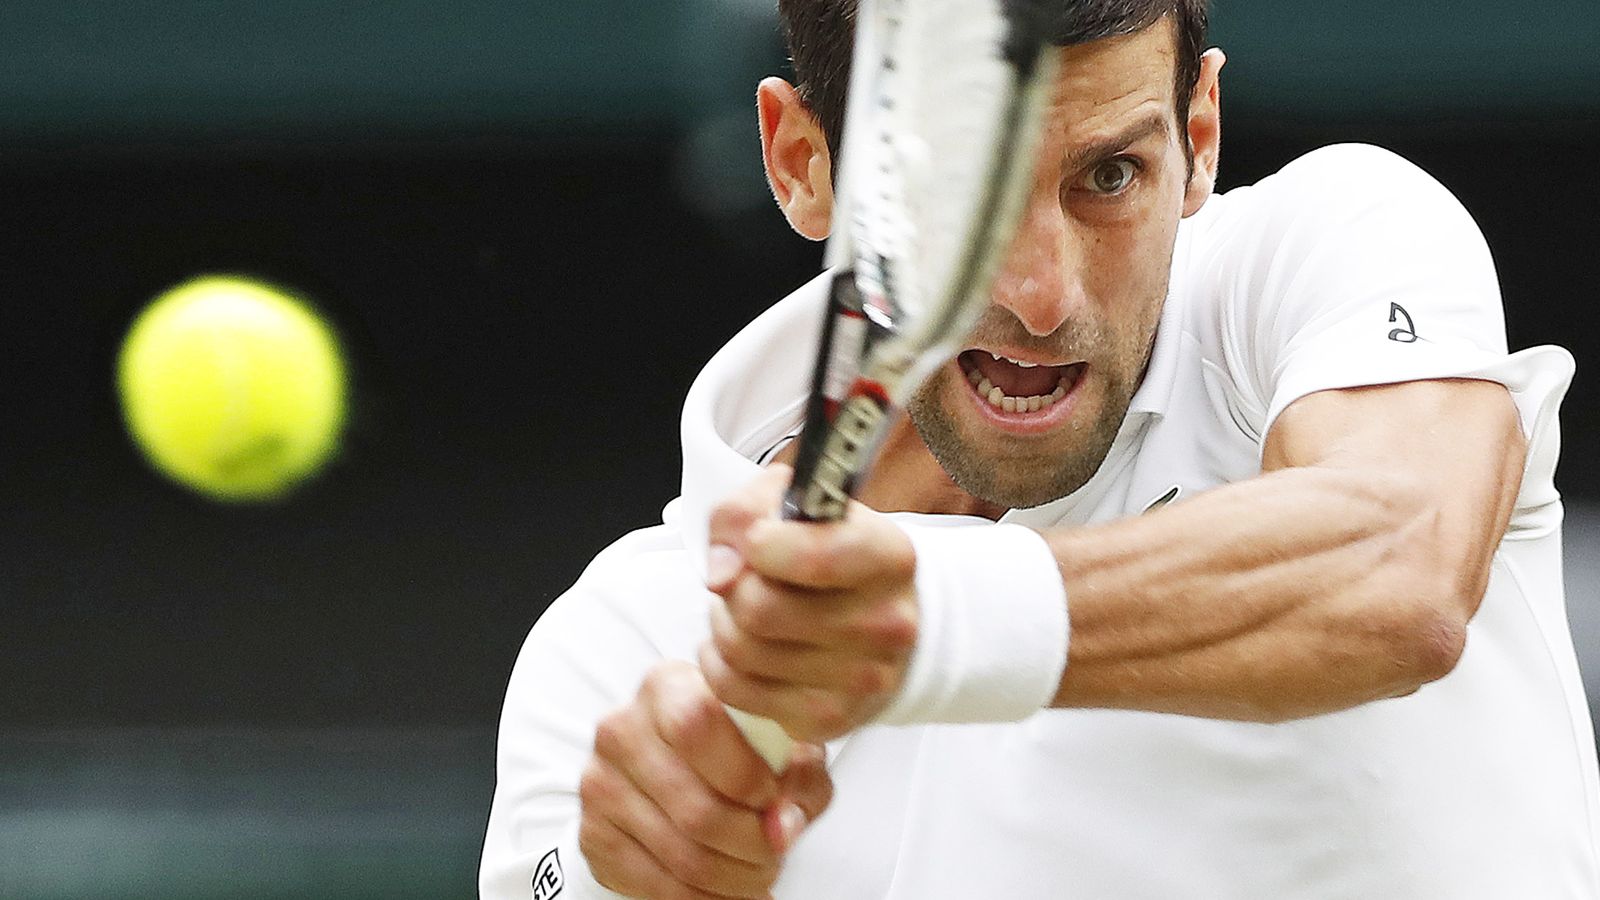 Heute live auf Sky Djokovic im Wimbledon-Finale gegen Anderson Tennis News Sky Sport